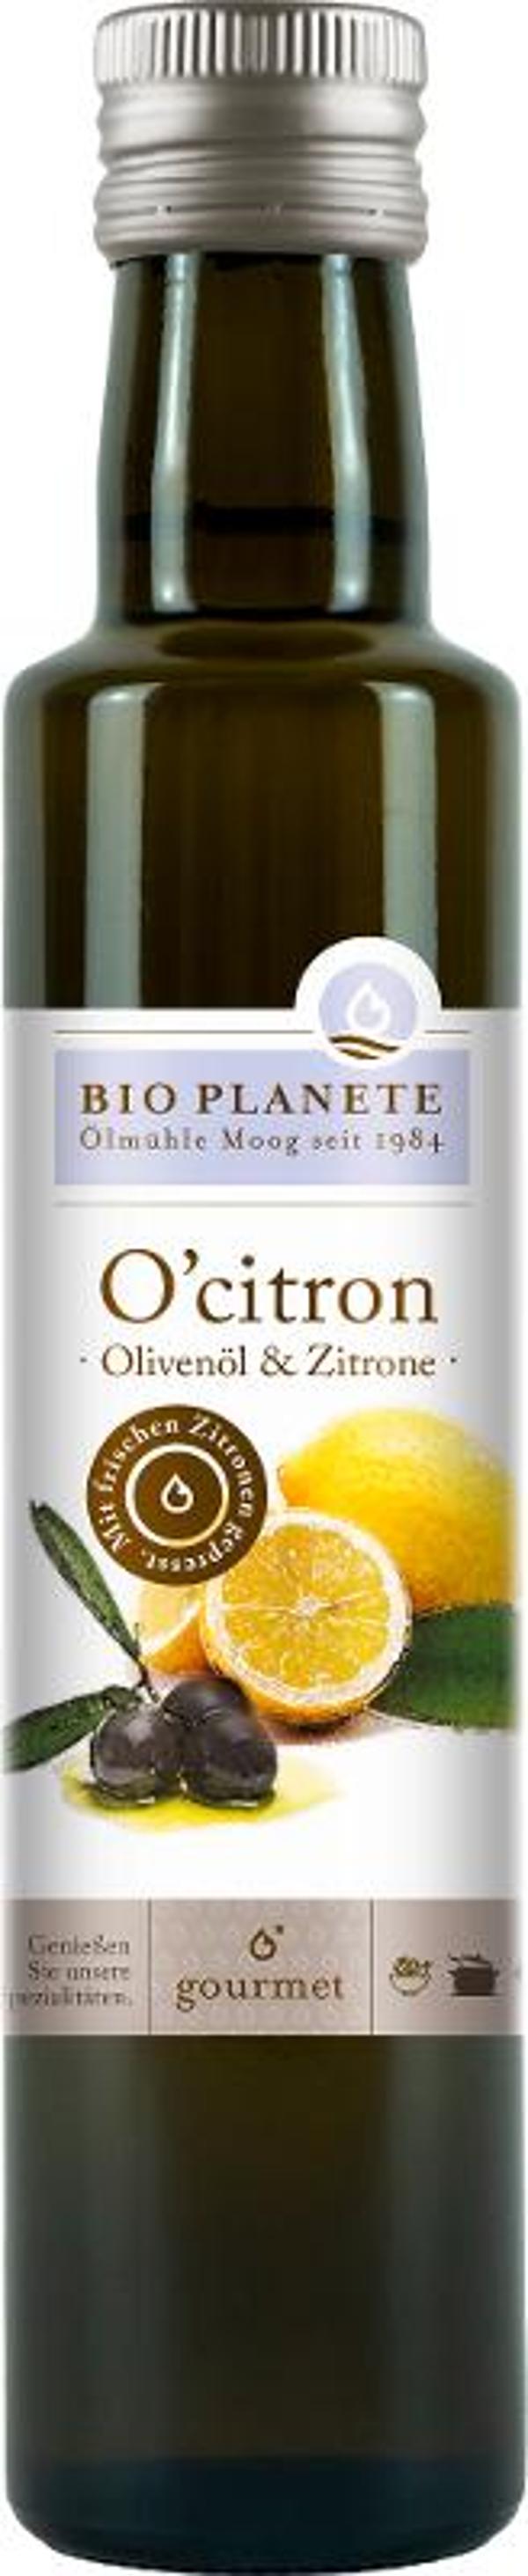 Produktfoto zu Olivenöl o'citron von Bio Planète